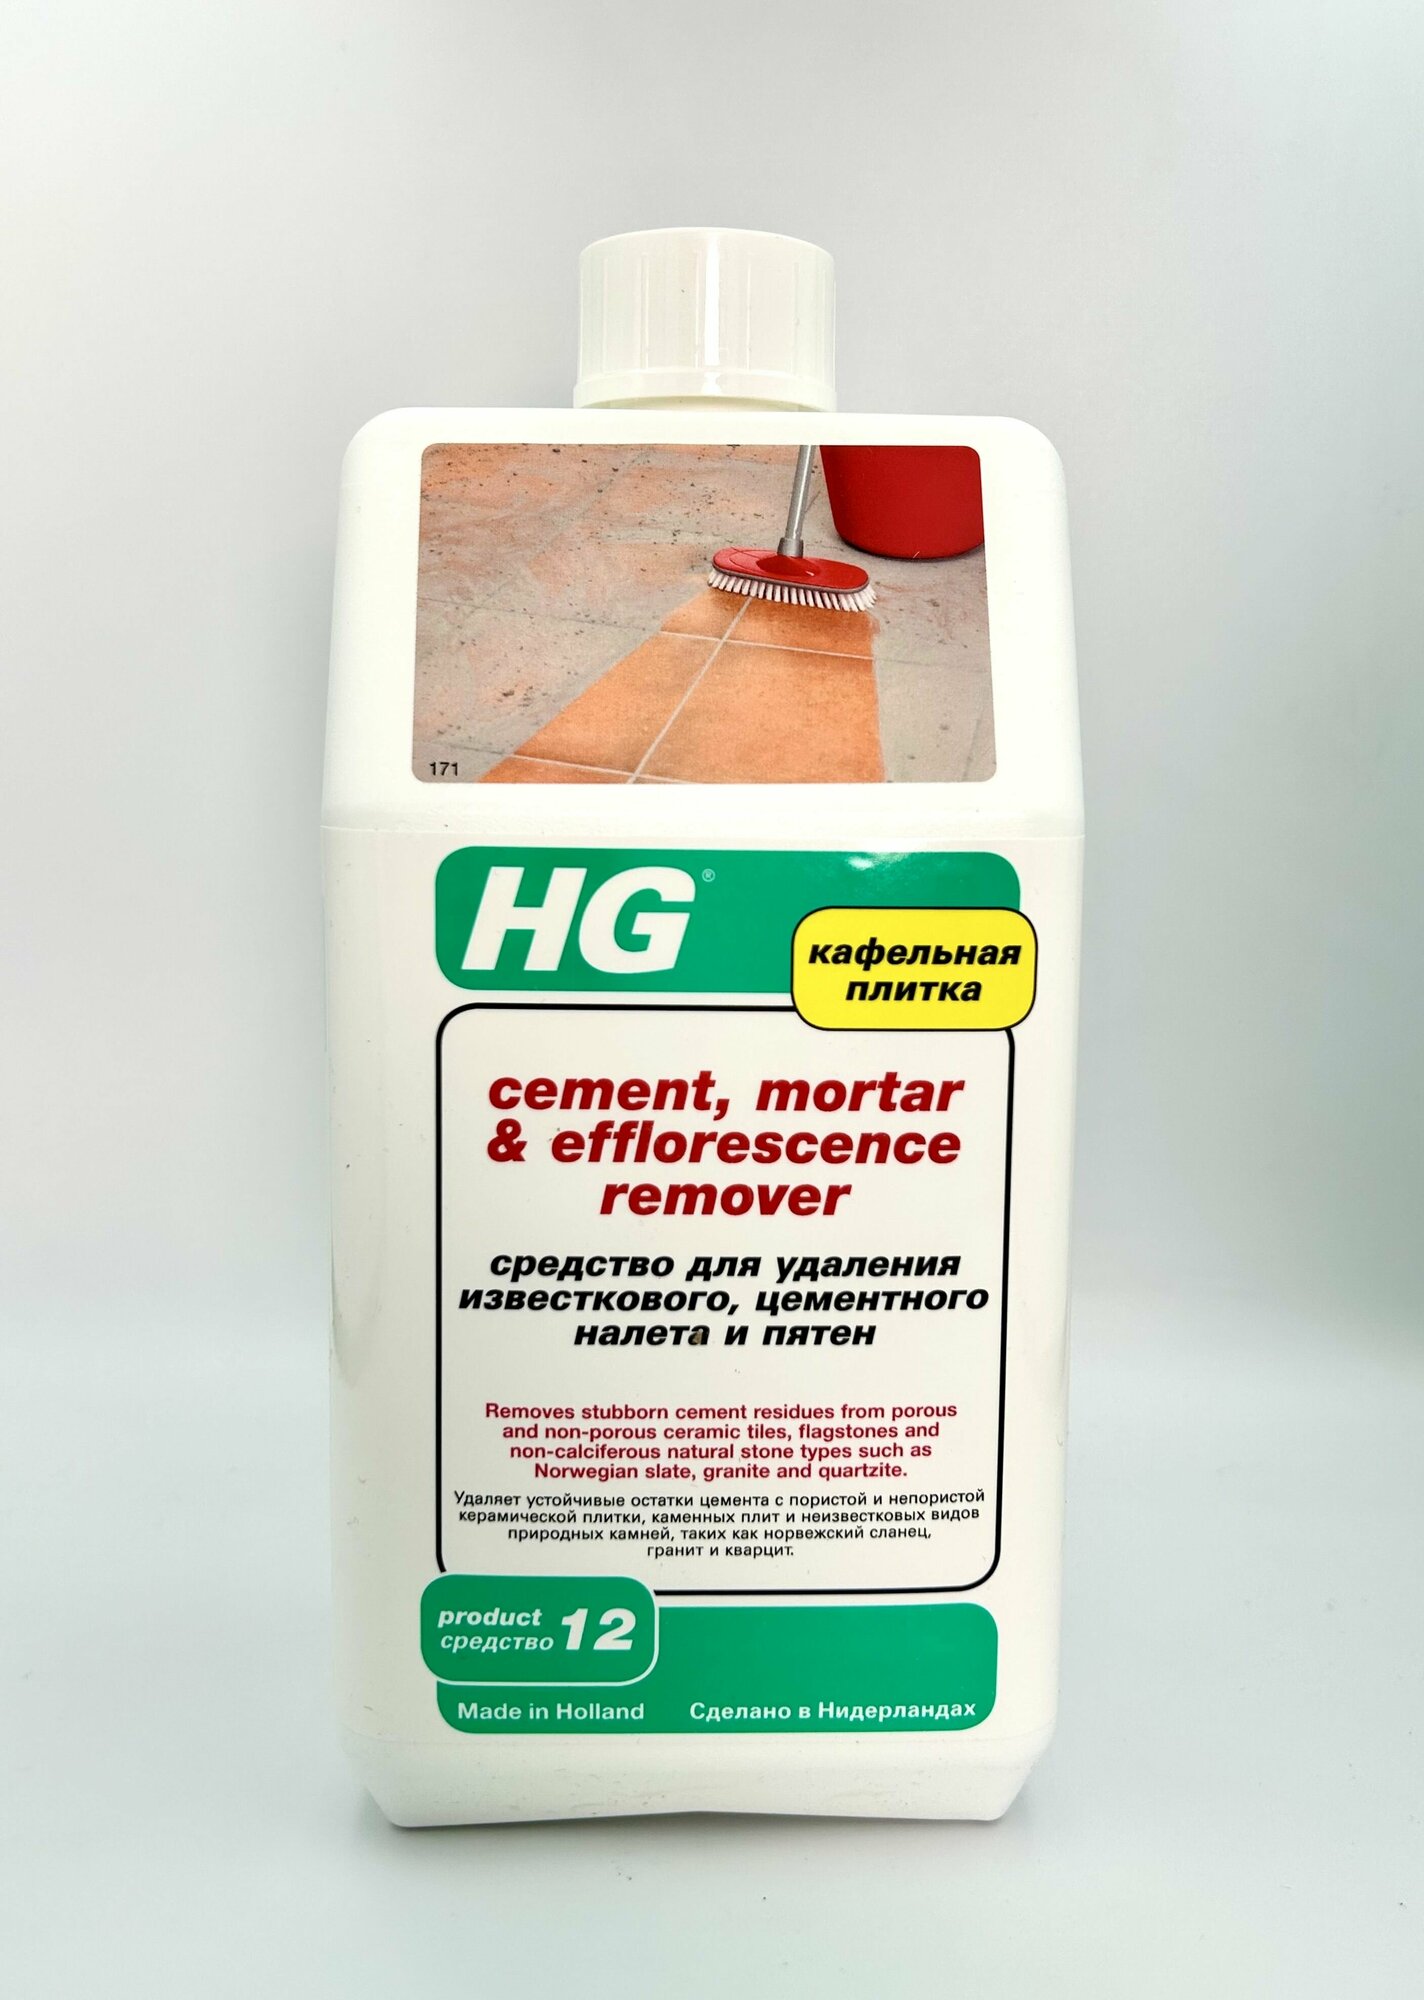 HG Средство для удаления известкового, цементного налета и пятен 1 л средство №12